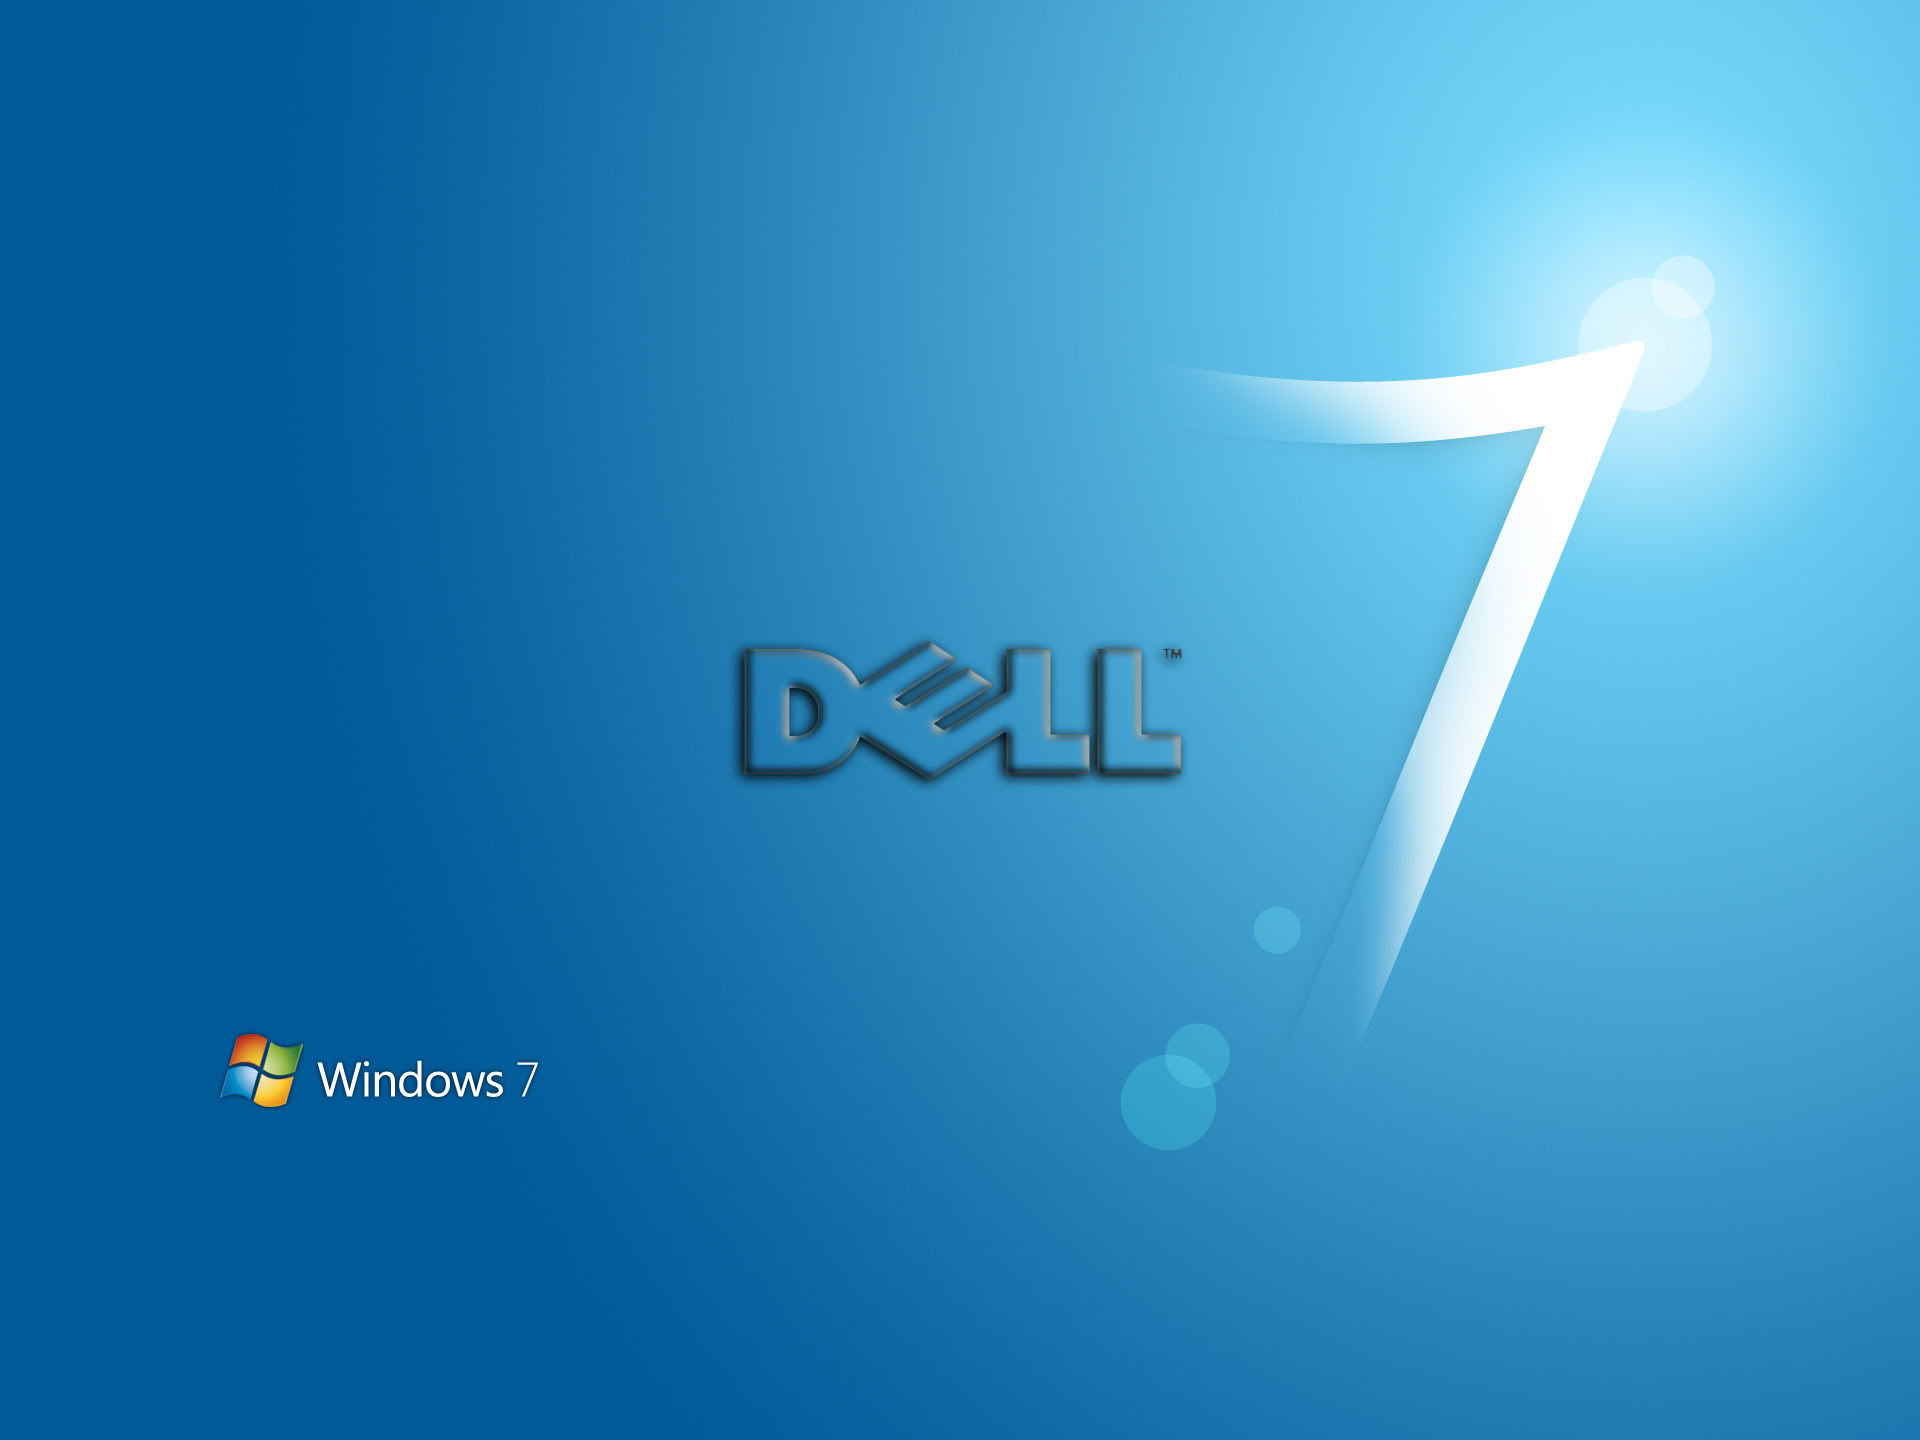 49+] Dell Wallpaper Windows 7 Free - WallpaperSafari